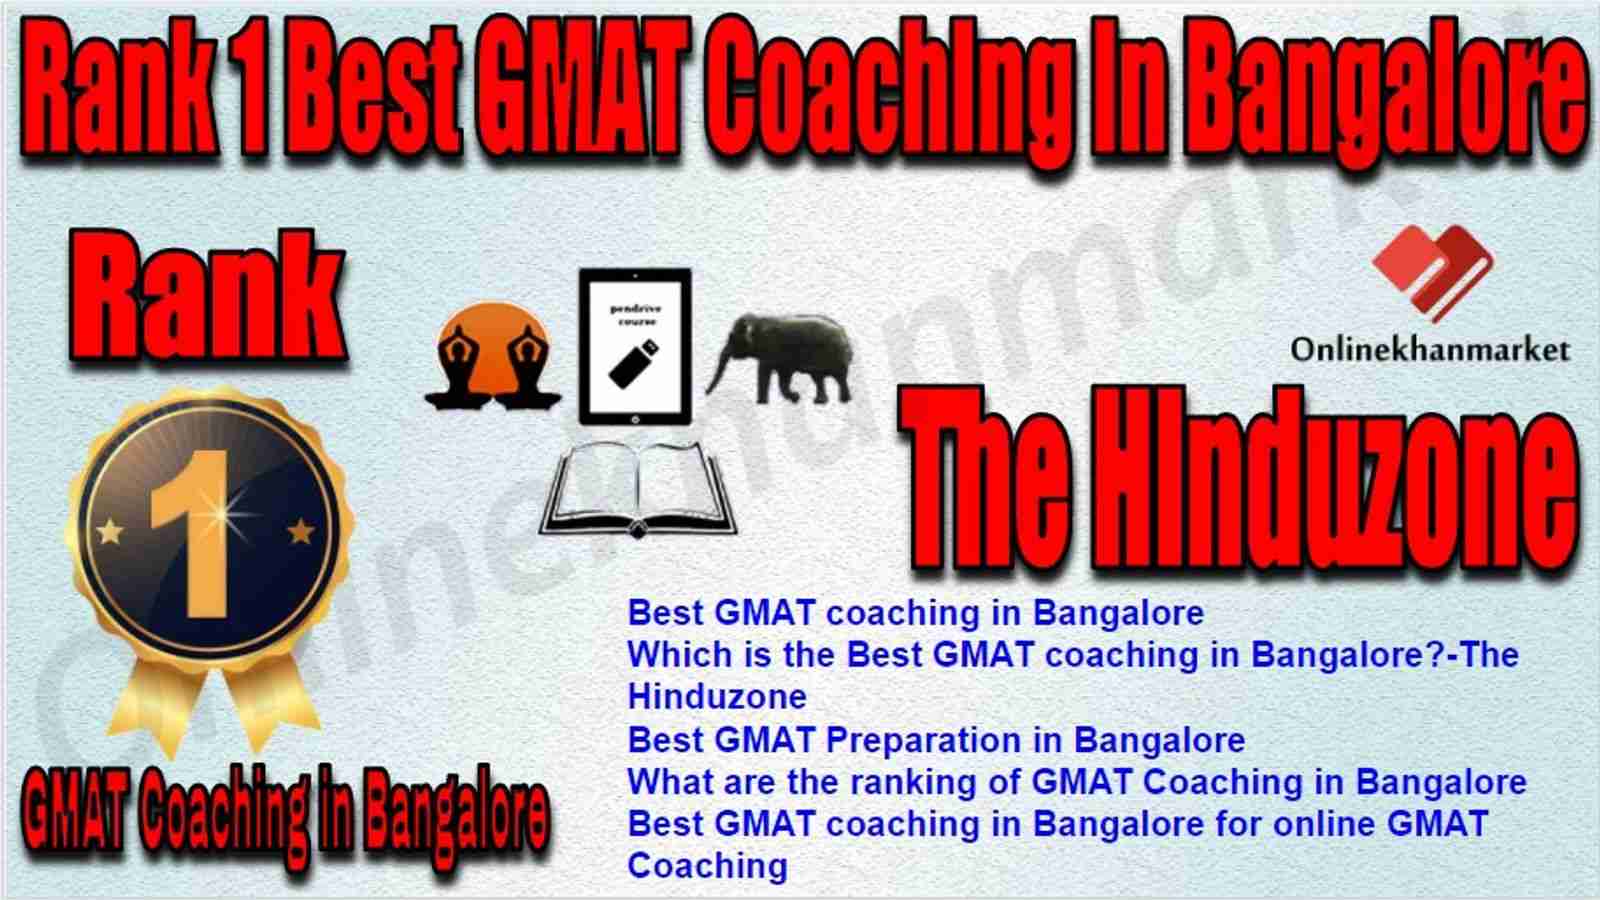 Rank 1 Best GMAT Coaching in Bangalore